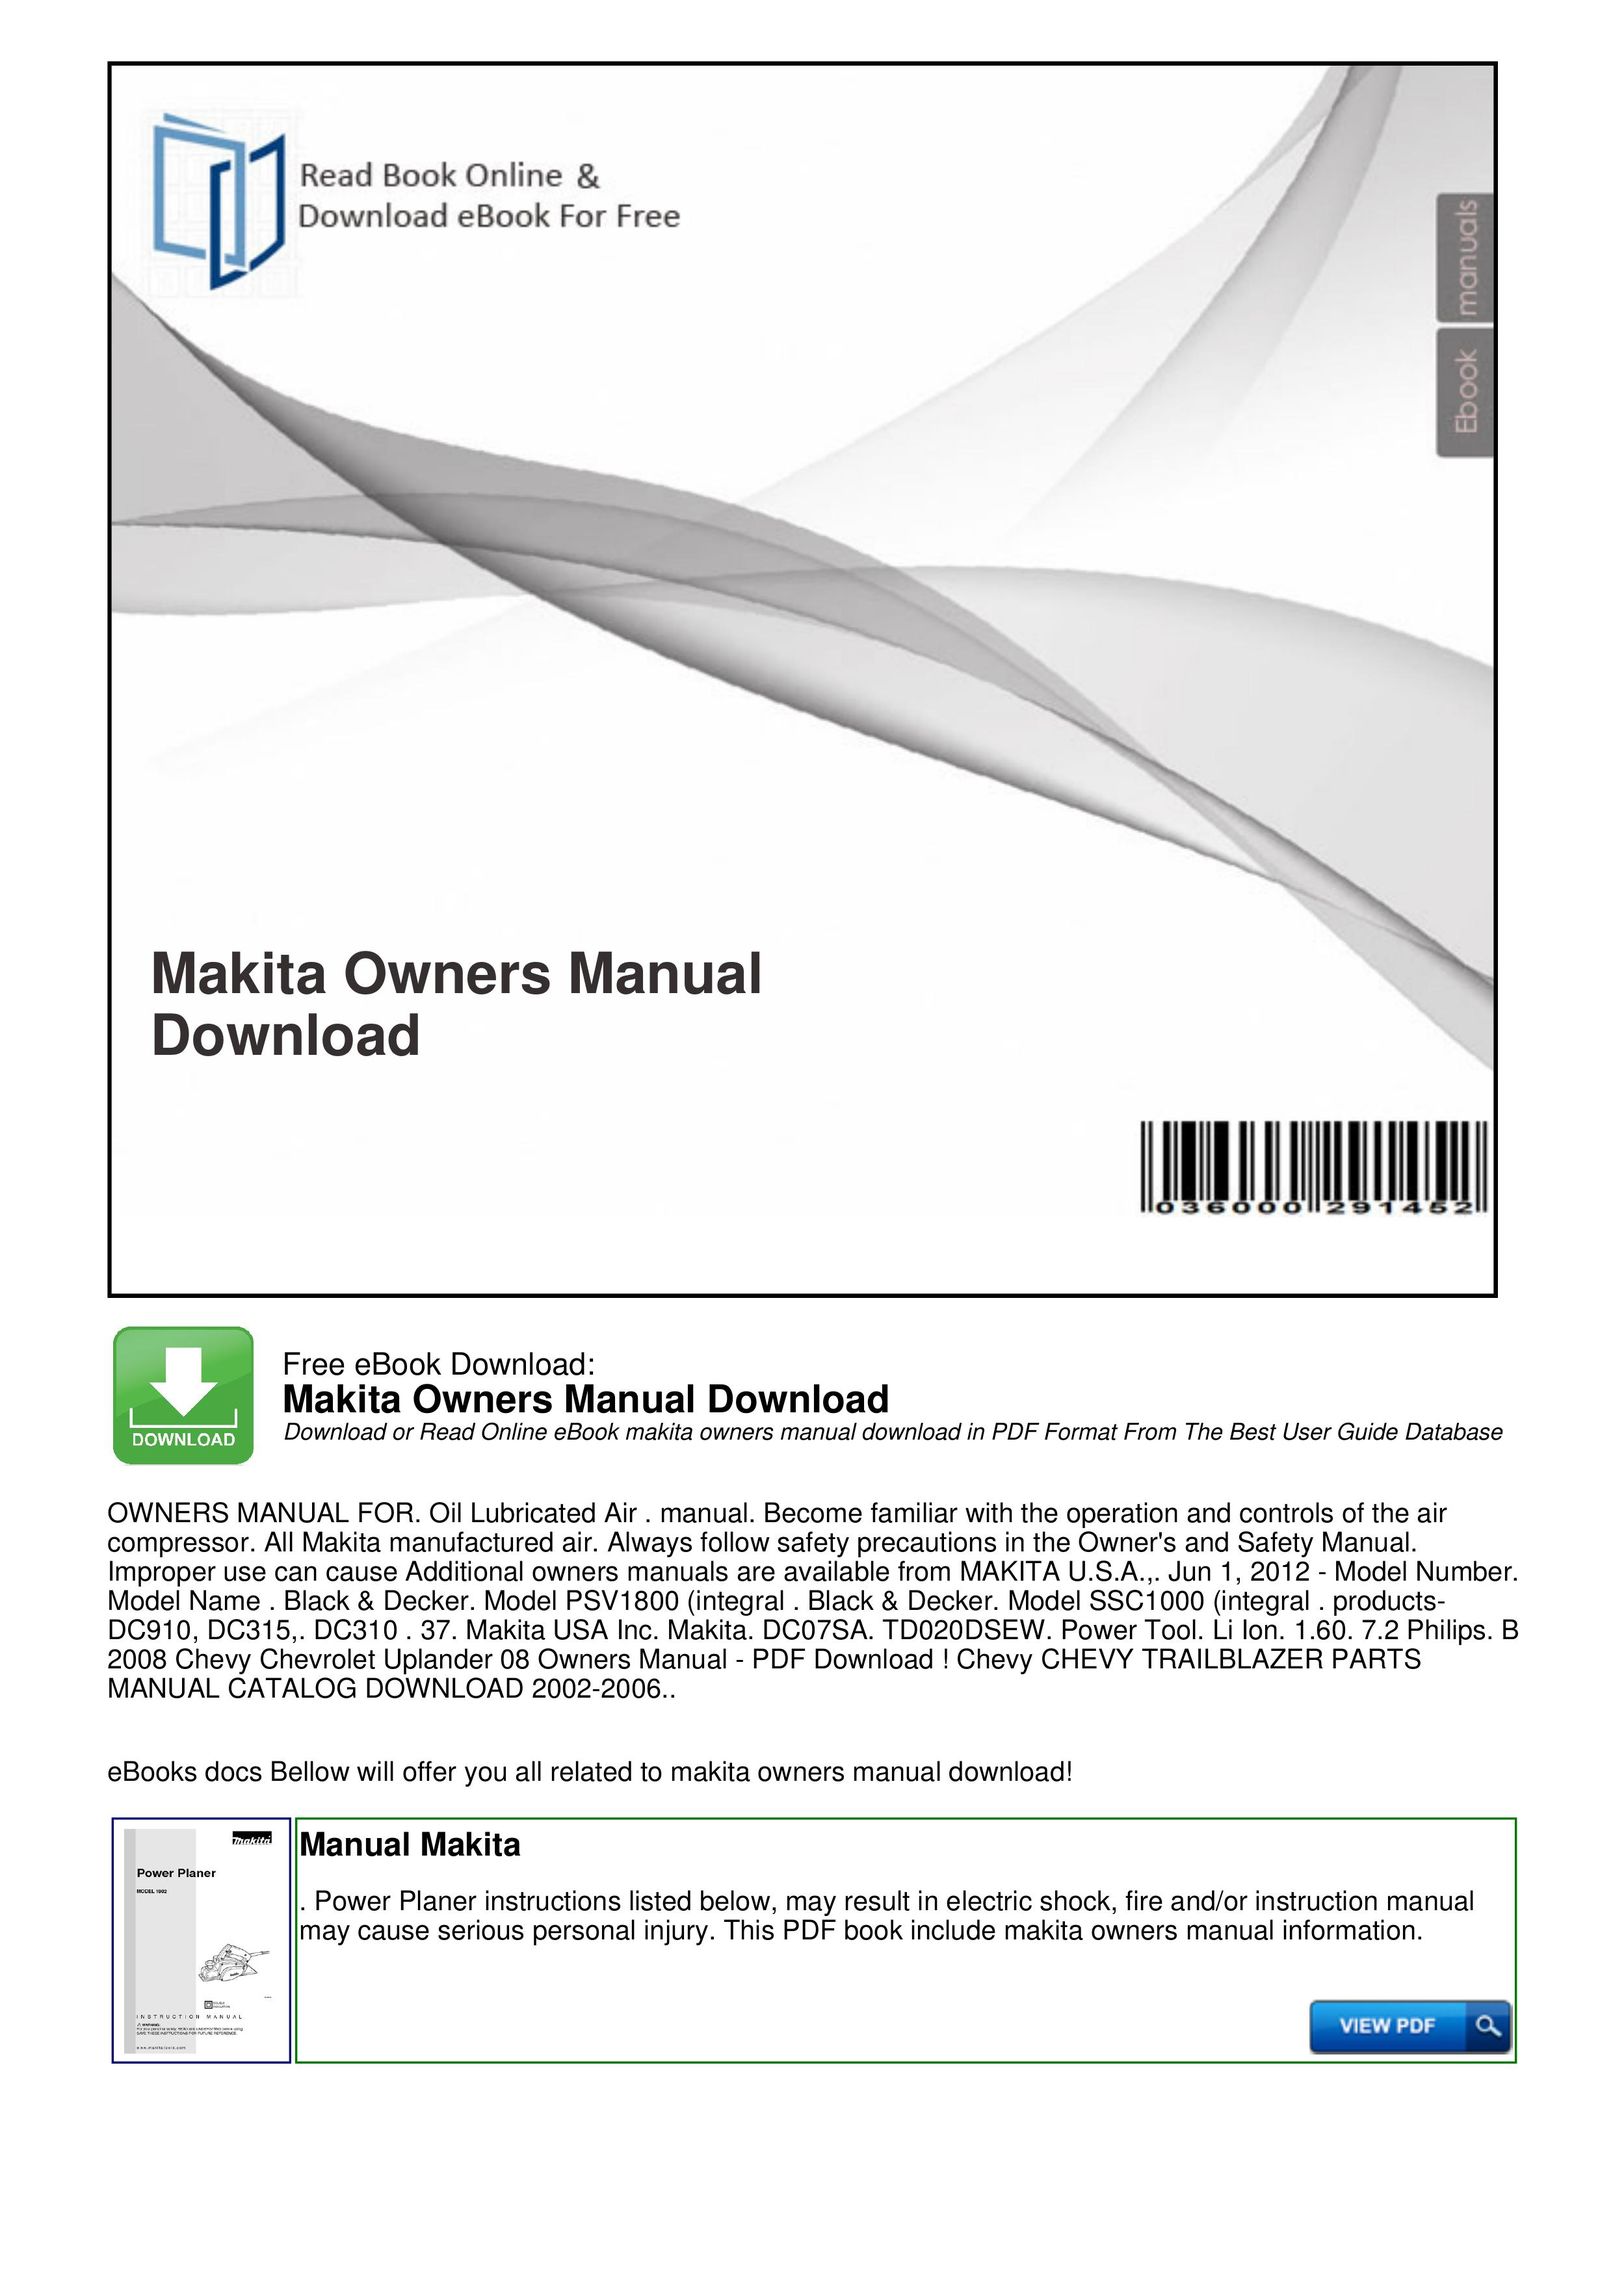 Makita SSC1000 eBook Reader User Manual